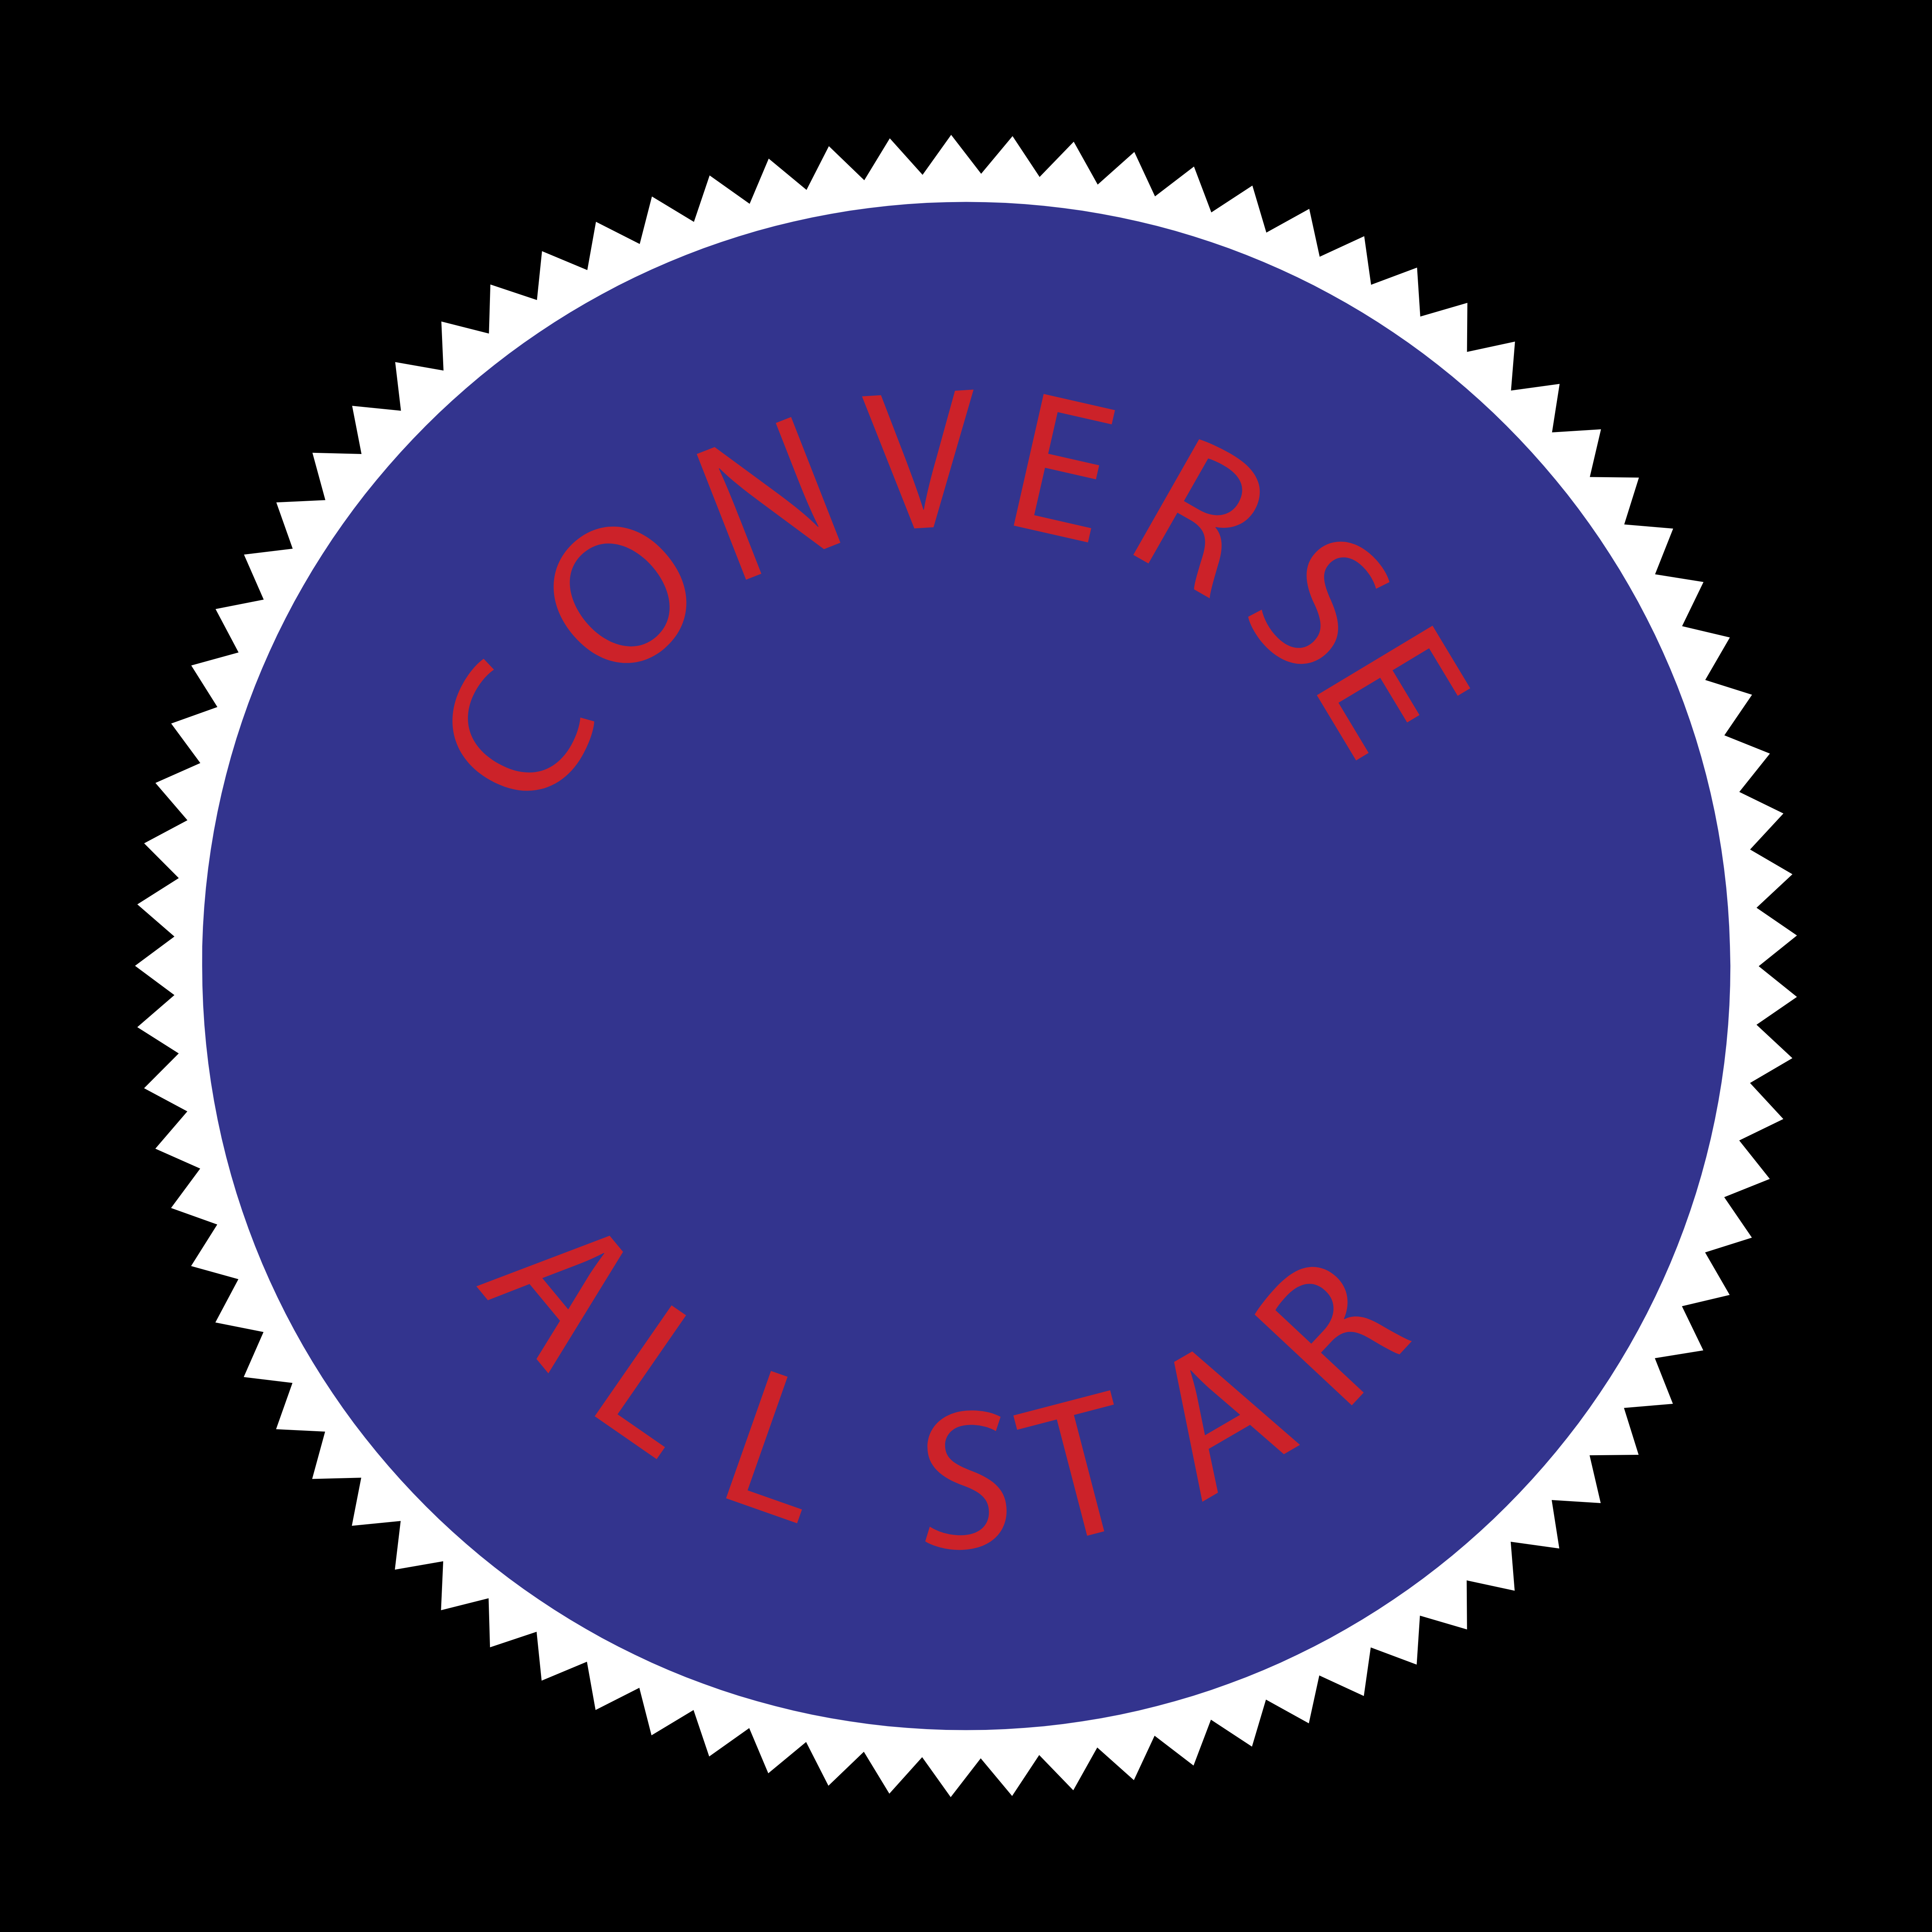 converse logo maker